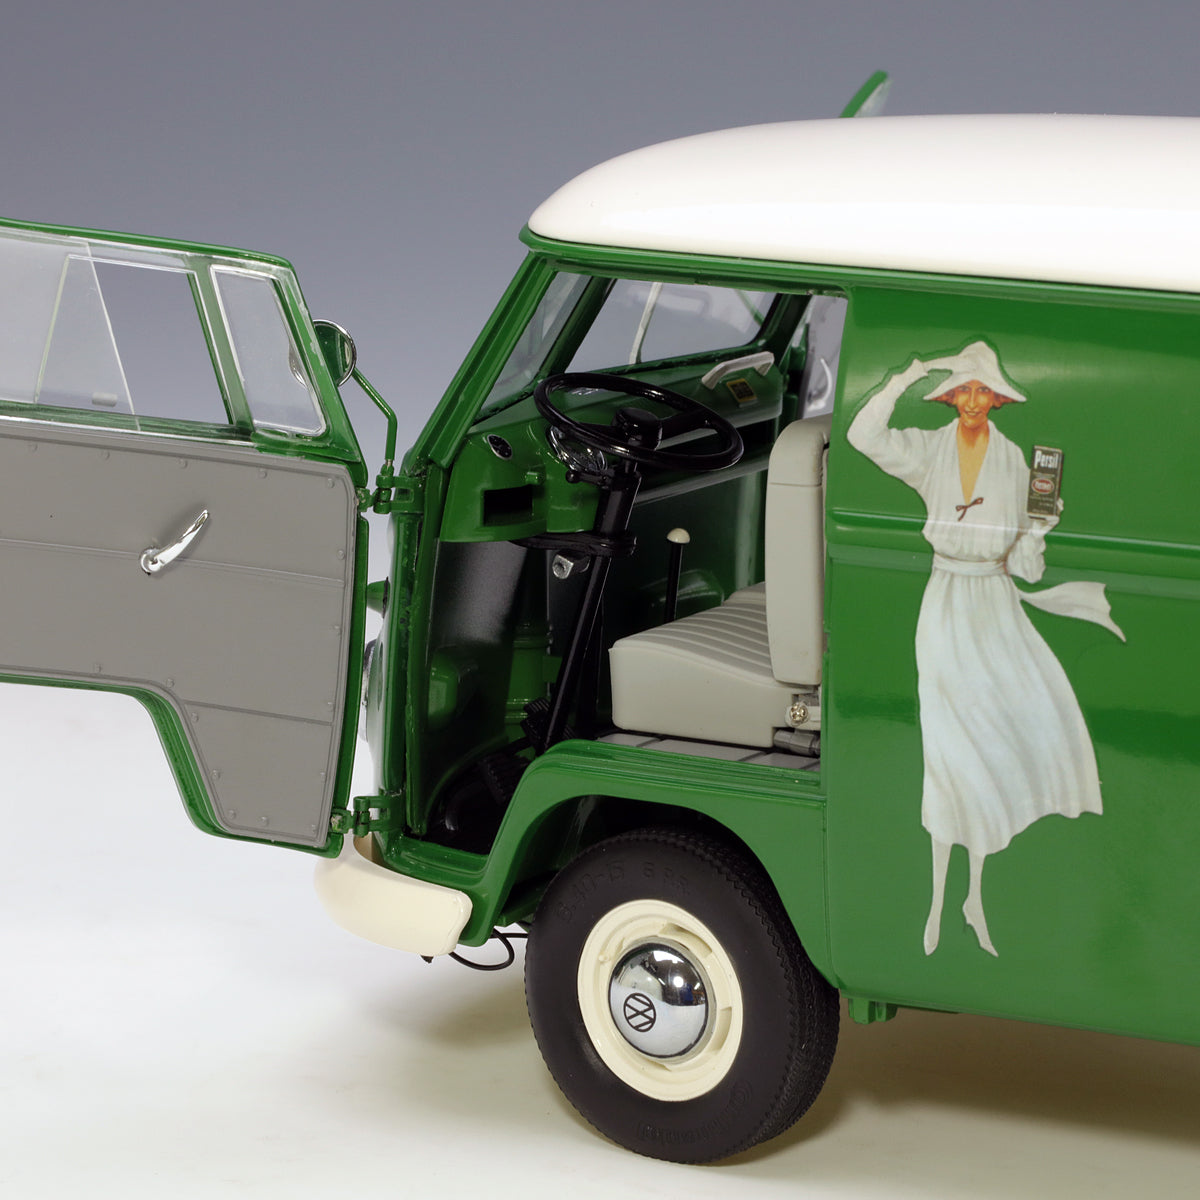 Schuco 1:18 Volkswagen T1b transporter Persil Year 1959-63 green 450036600